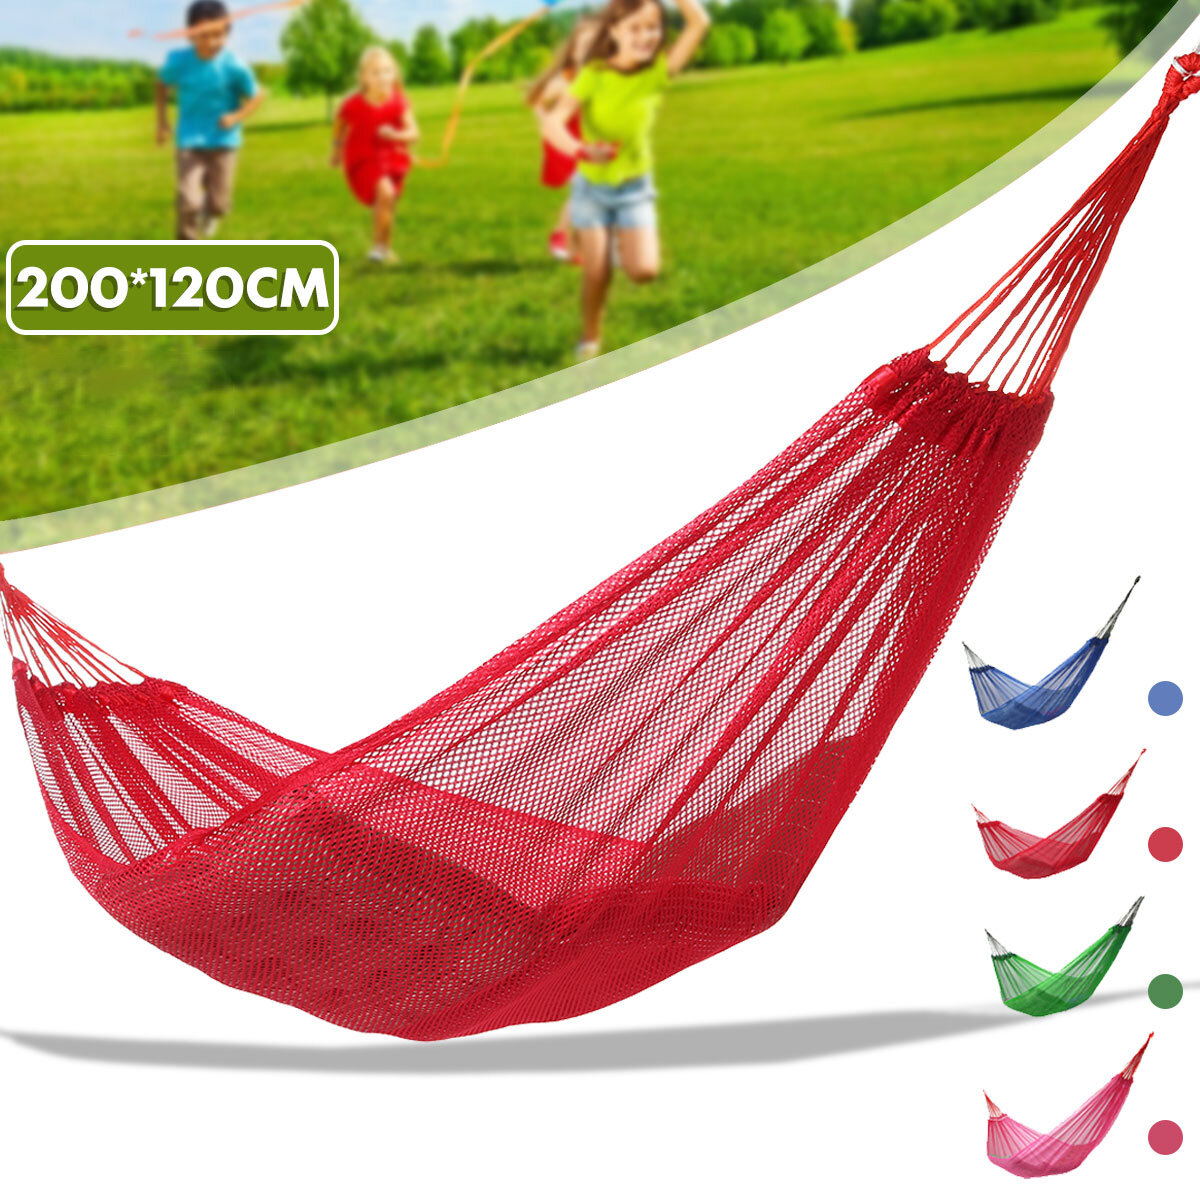 200x120cm Ice Silk Hammock Casual Lightweight Swing Bed Hang Sleeping Bed Outdoor Camping Travel